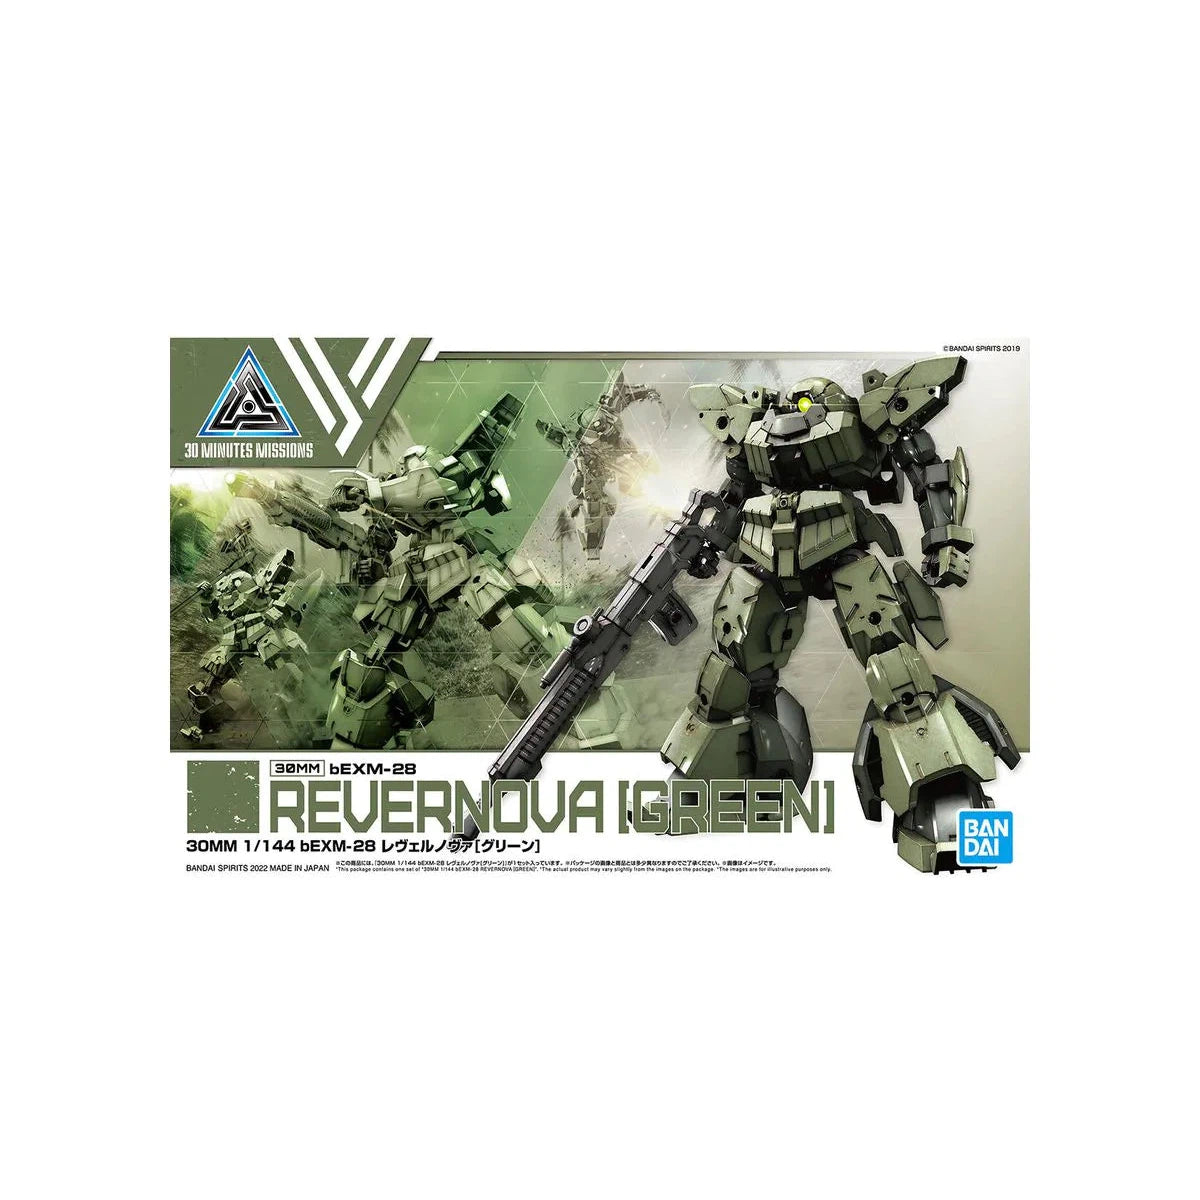 bEXM-28 Revernova [Green] 30MM 1/144